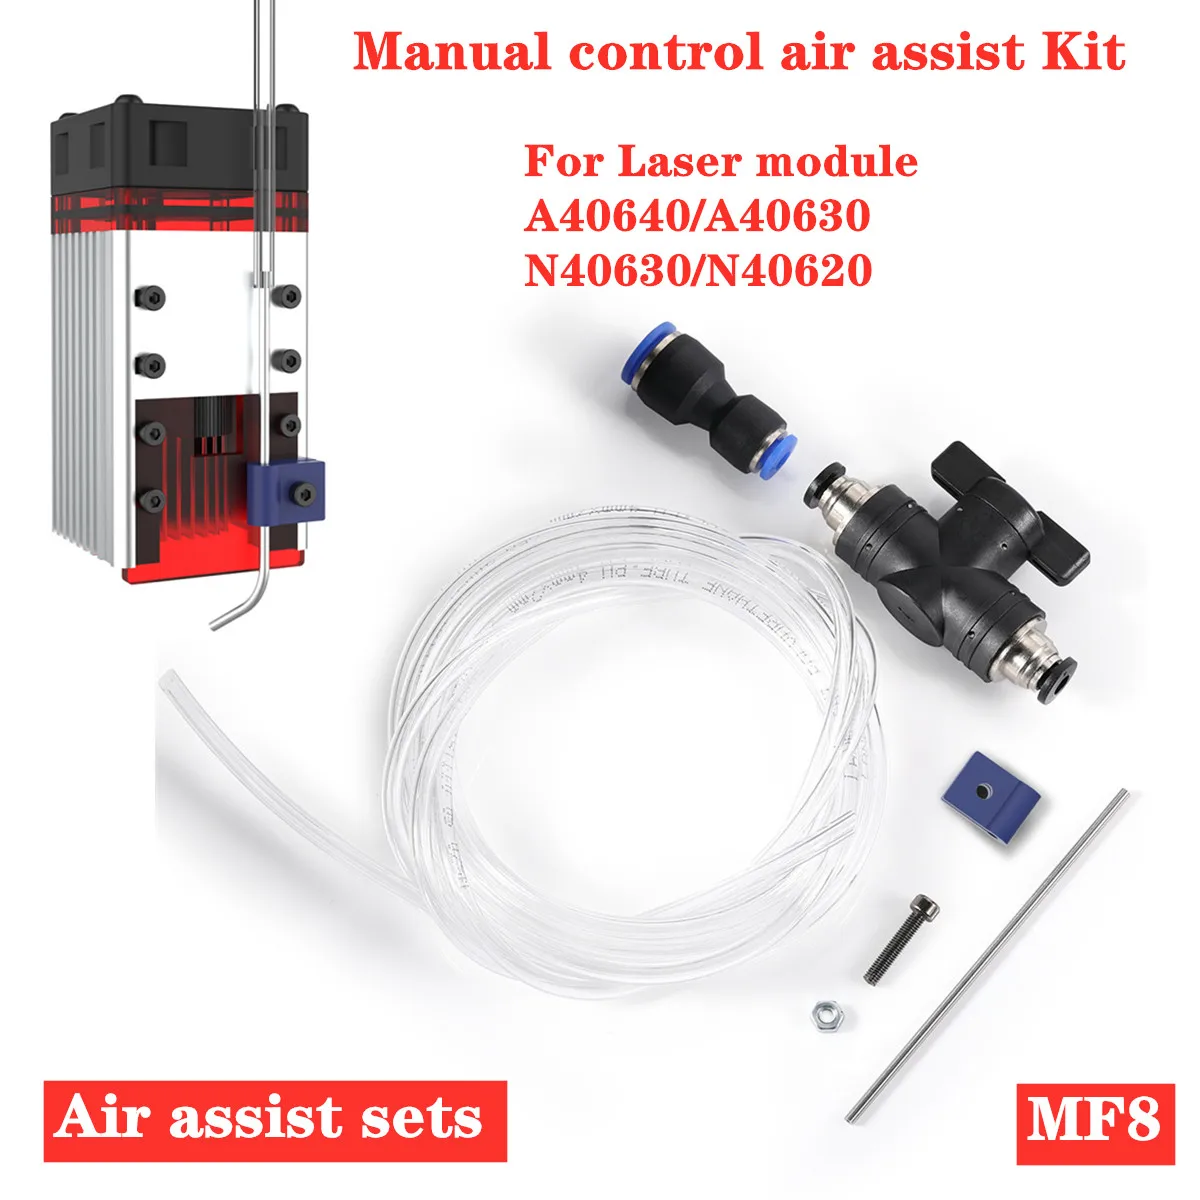 NEJE MF8 /MF11 /MF15 Kit de asistencia de aire de Control Manual para módulos láser NEJE